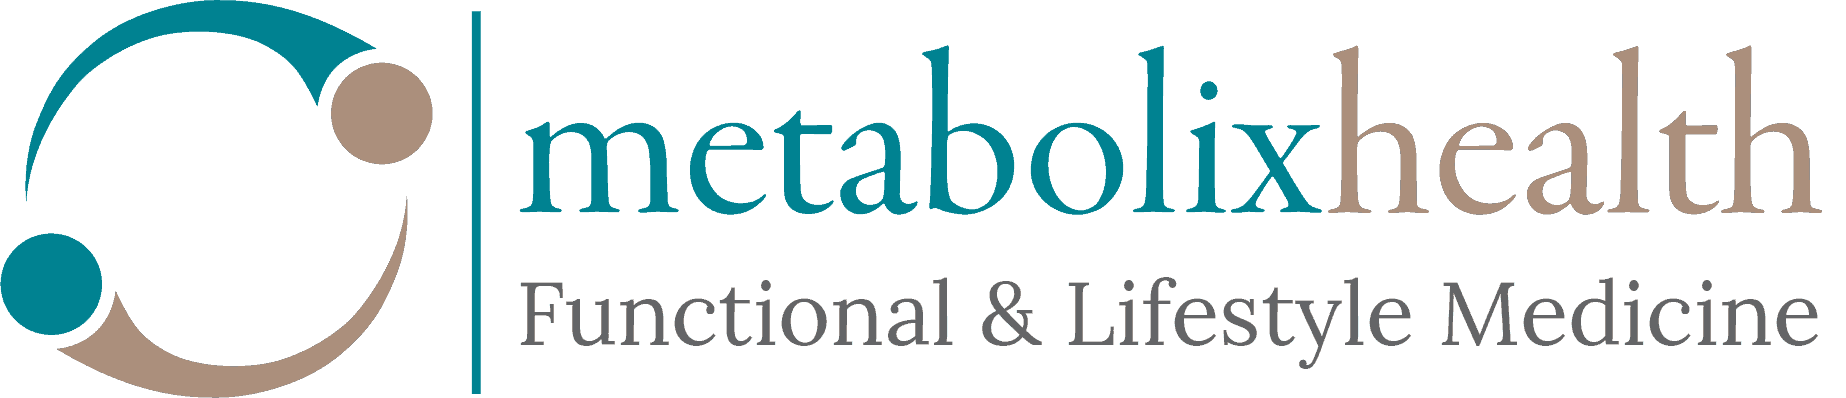 Metabolix health Logo